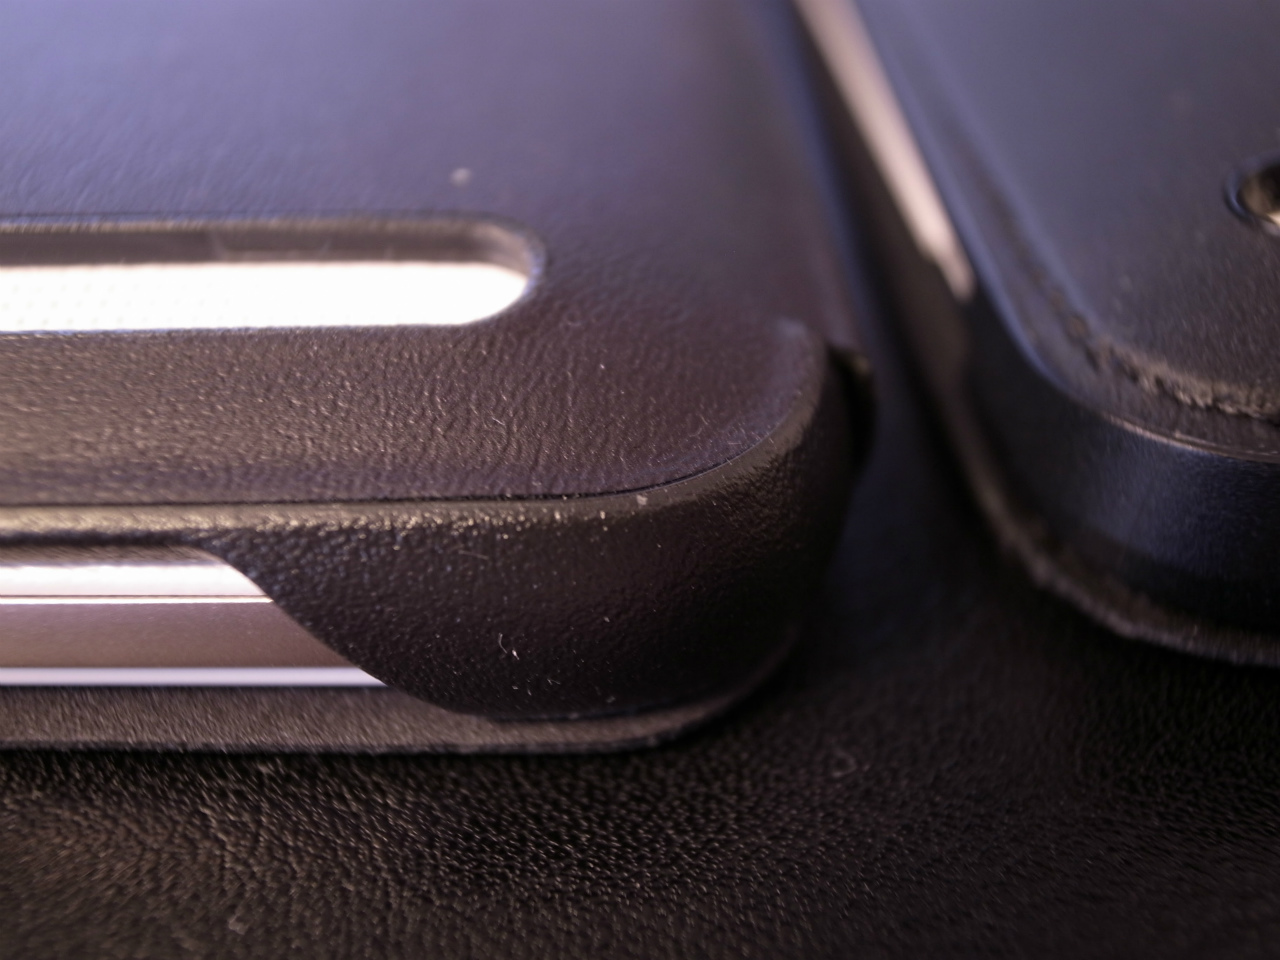 ZenFone Max VIEW FLIP CASE 綺麗に貼り合わされて、縁の部分が引っかからないように滑らかな曲面になっています。